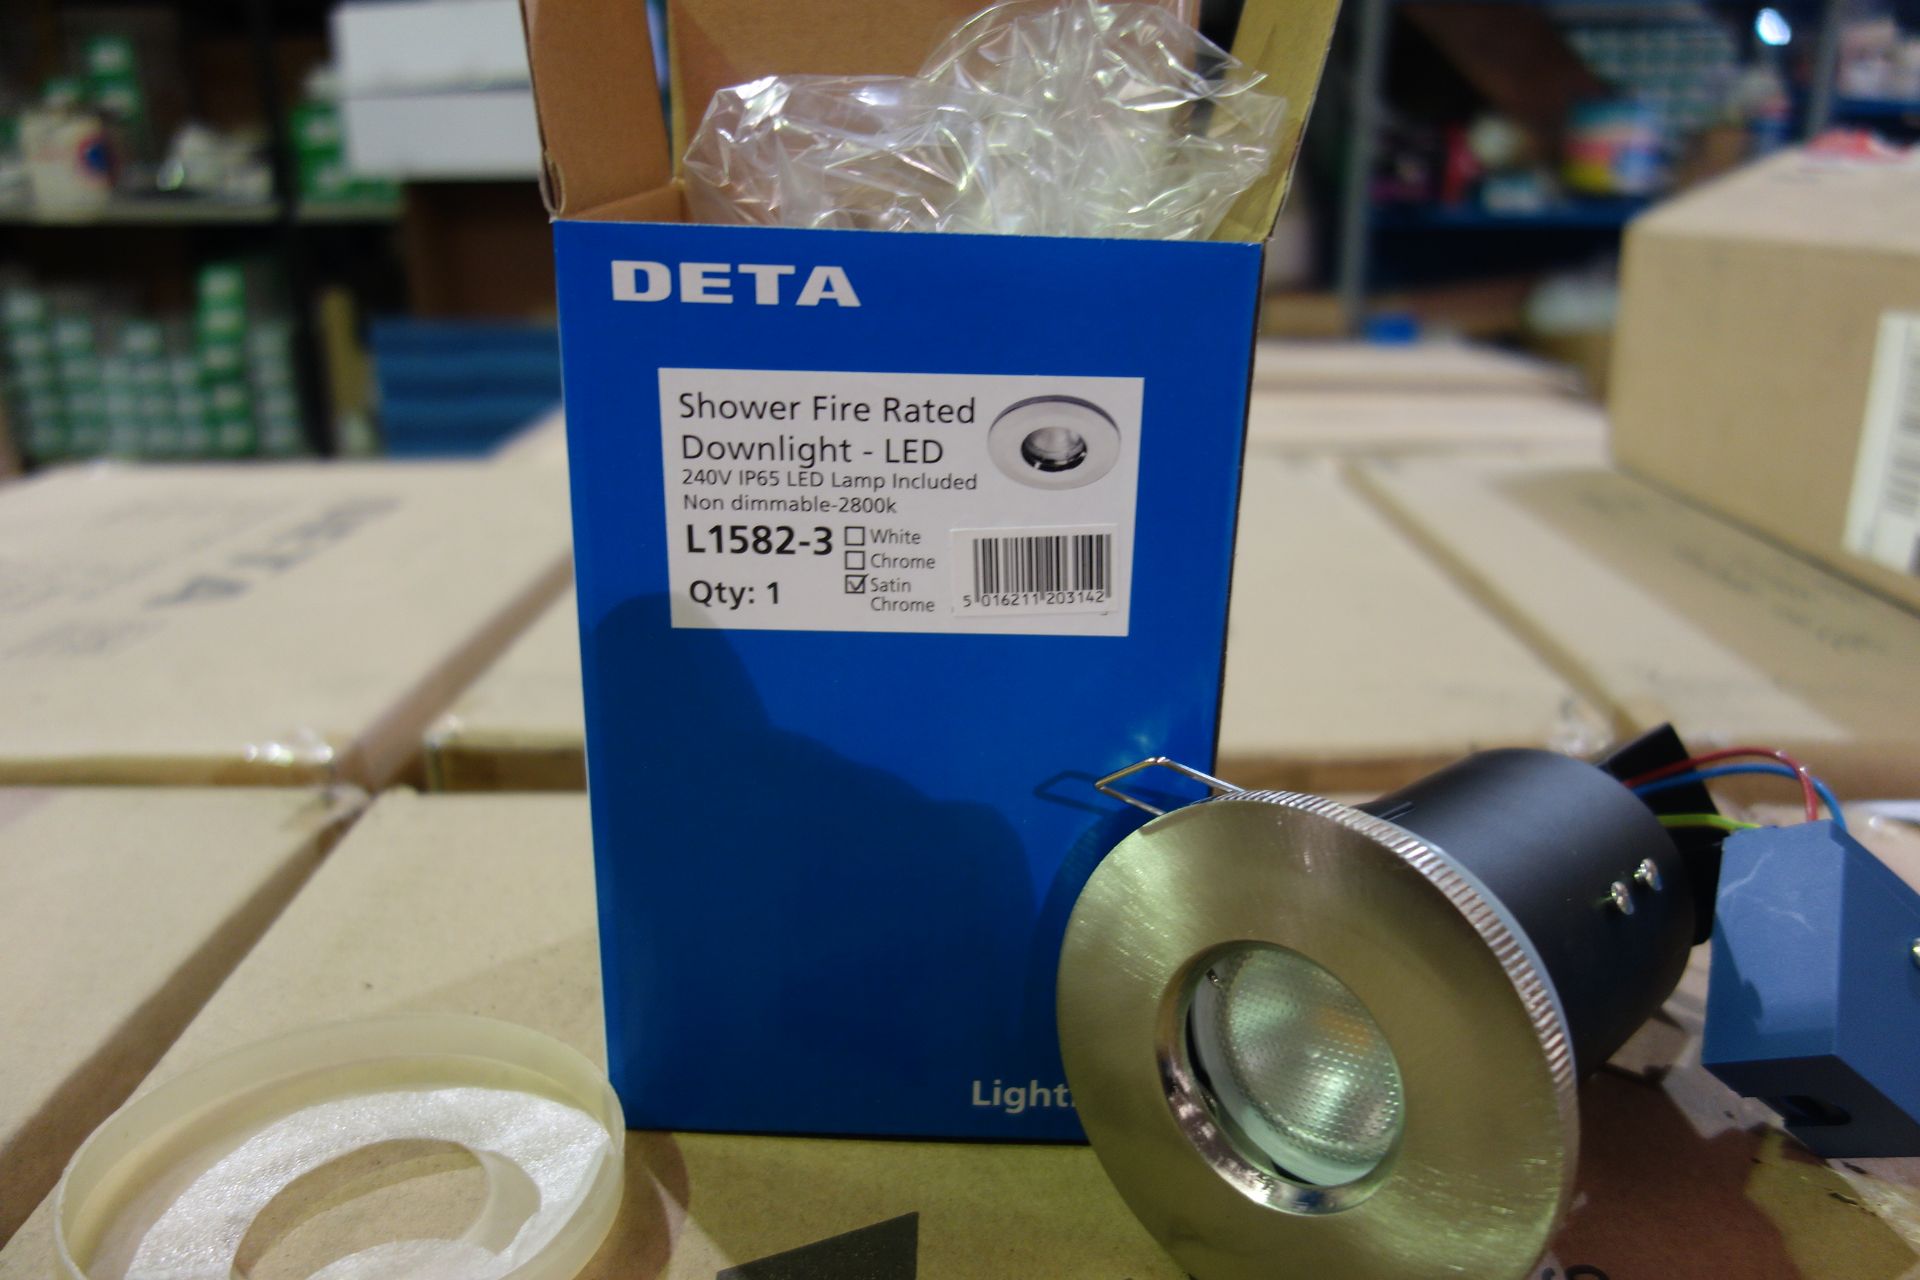 20 X Deta L1582-3 Satin Chrome LED Shower Fire Rated Downlight With 2800K LED Lamp